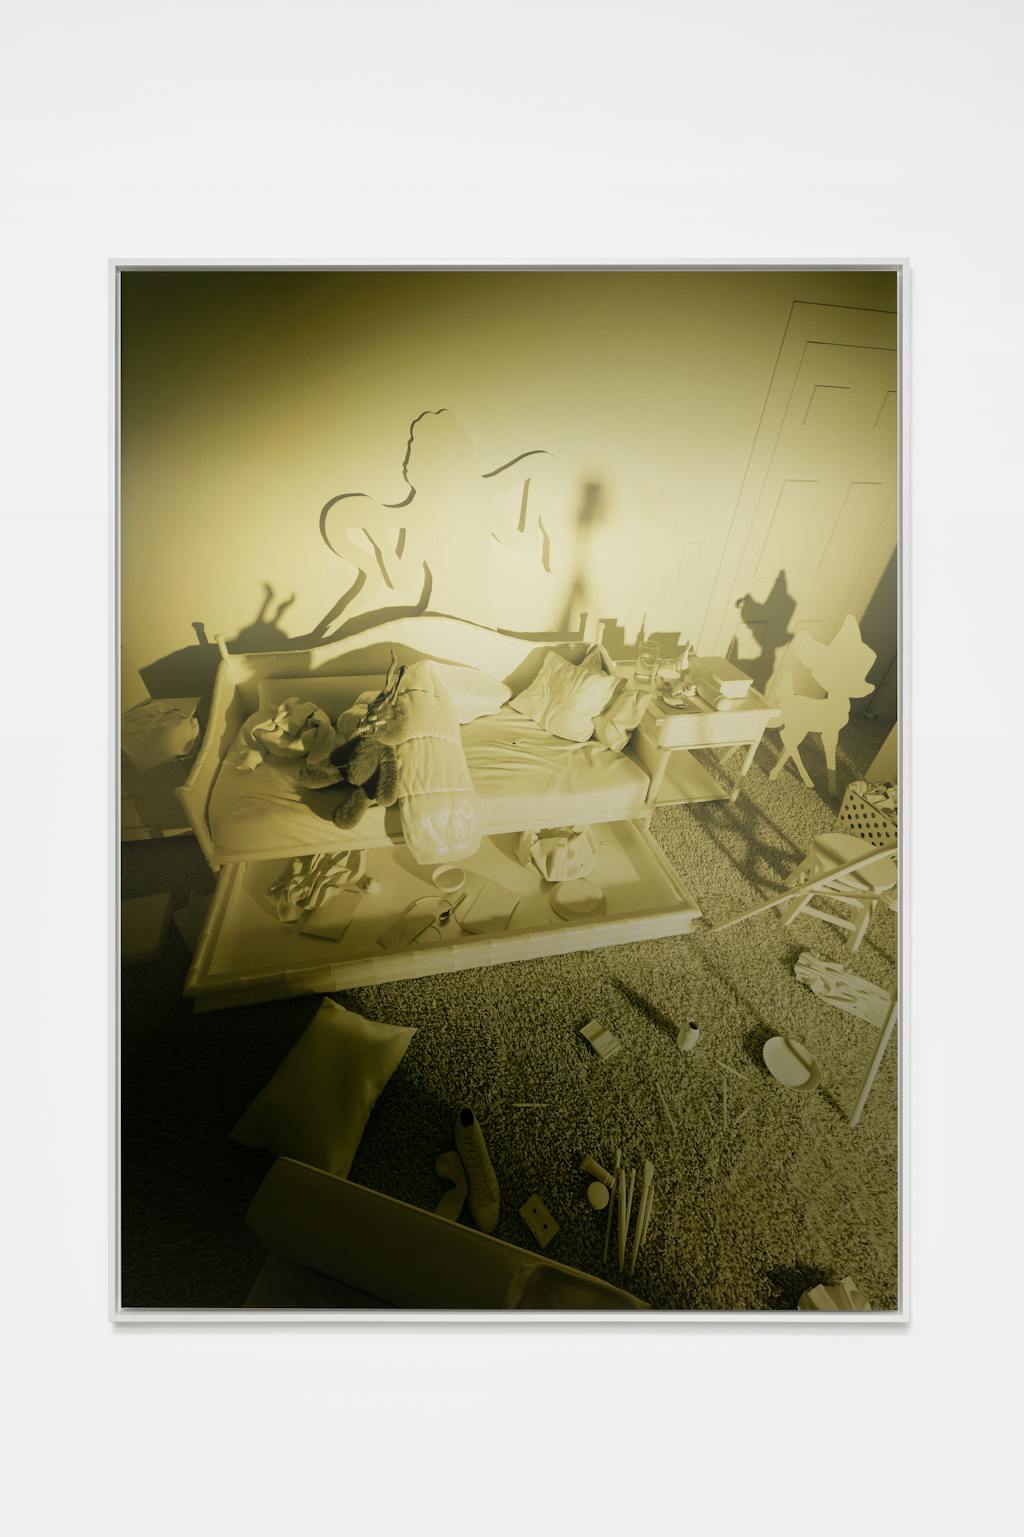 Erin Calla Watson
Goodnight Room, 2022
Dye sublimation print on aluminum mounted on Dibond, framed
57 1/2 x 43 in. (146.05 x 109.22 cm)
59 x 45 1/2 x 2 in. (149.86 x 115.57 x 5.08 cm) (framed dims)
Unique - © (c) Erin Calla Watson, Paris Internationale